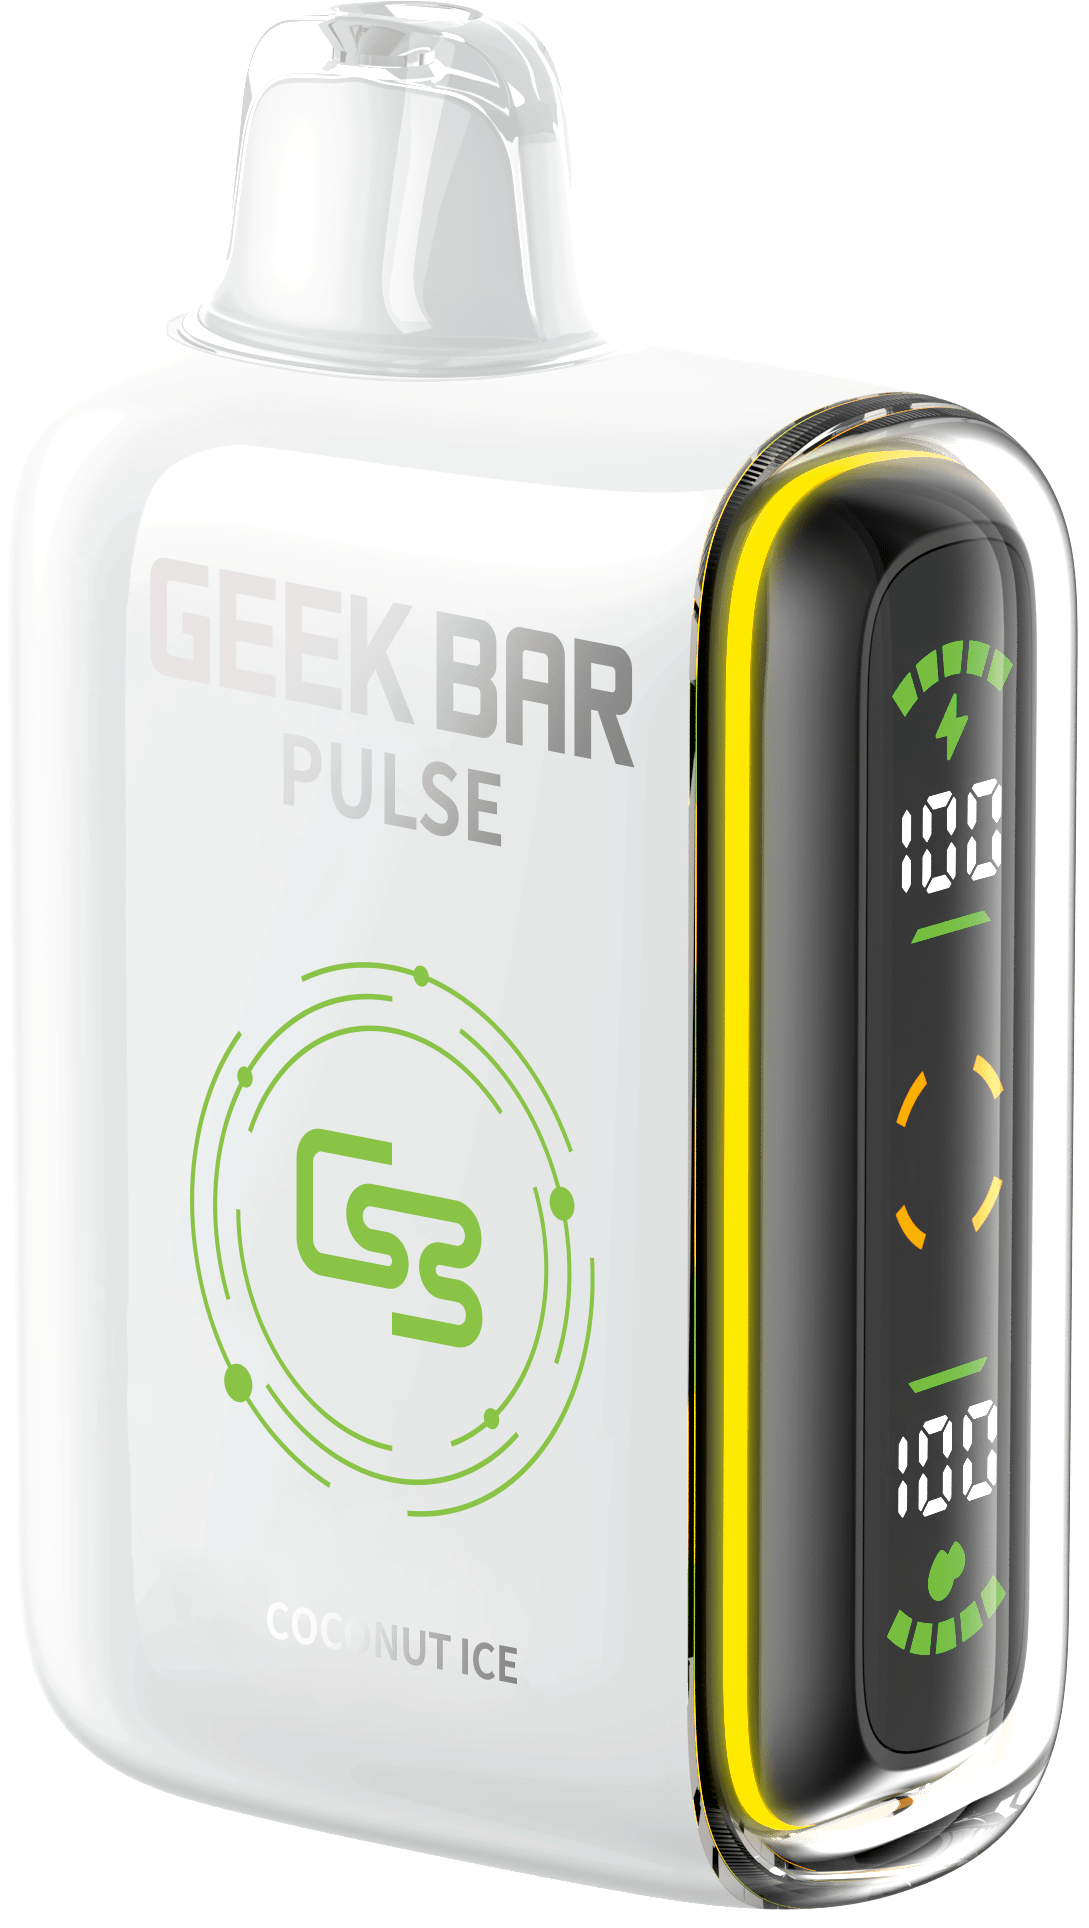 Geek Bar Pulse - Coconut Ice Disposable Vape available on Canada online vape shop